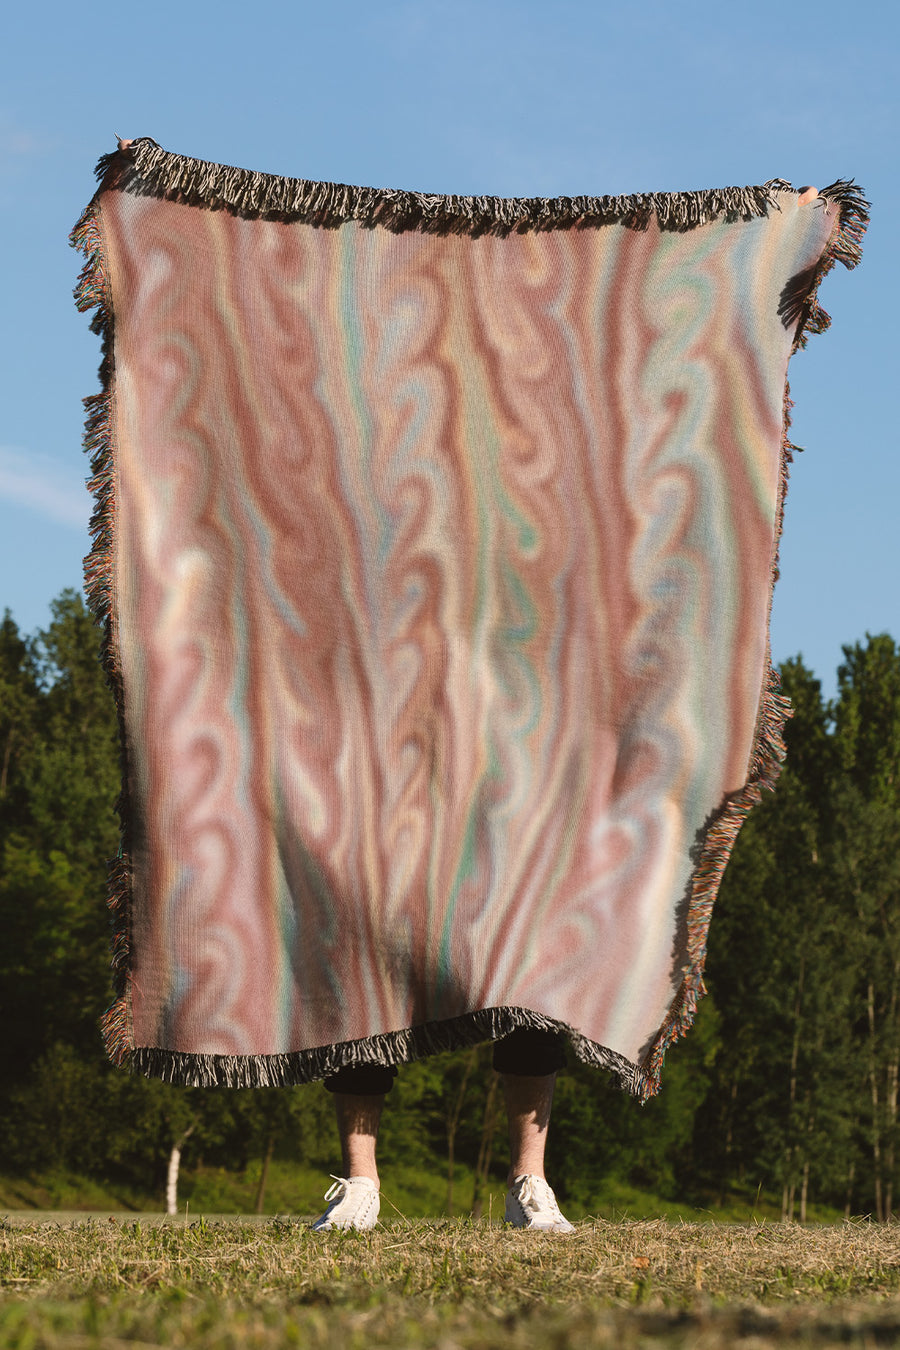 Terracotta Swirls Cotton Woven Throw Blanket showcasing an elegant terracotta swirls design.